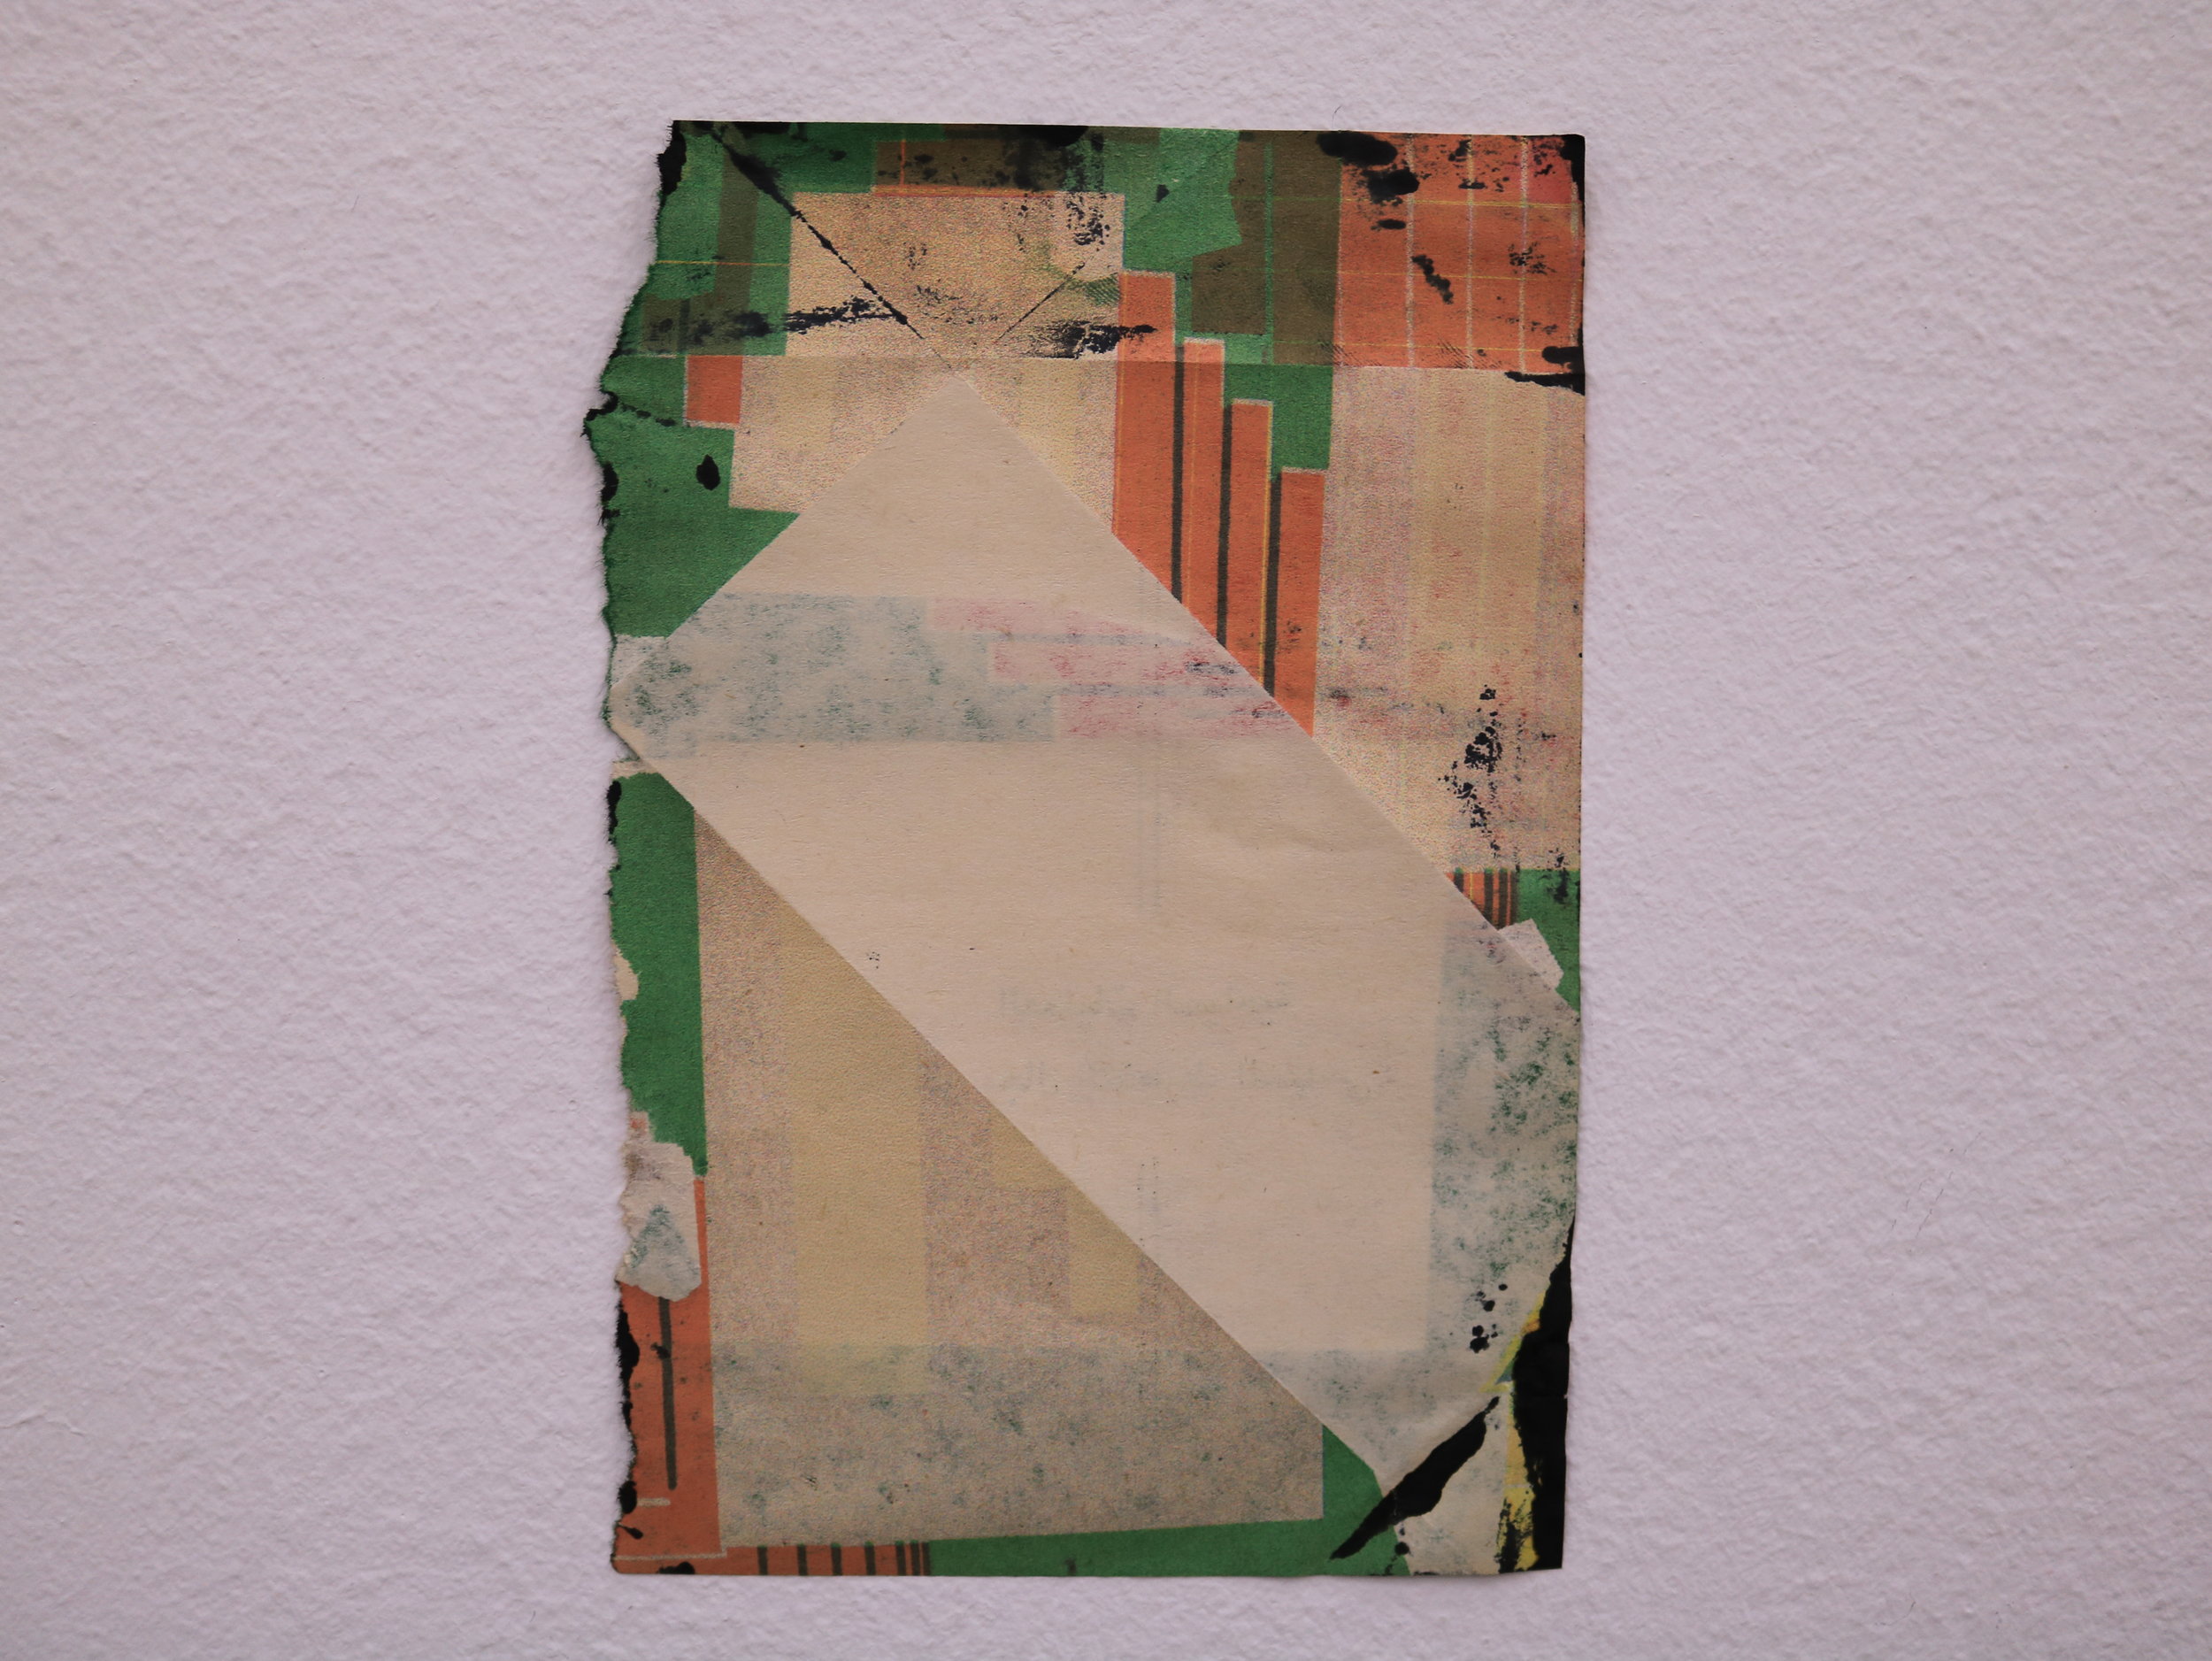  Untitled, 2016, Inkjet on book page, 16 cm x 12 cm. 